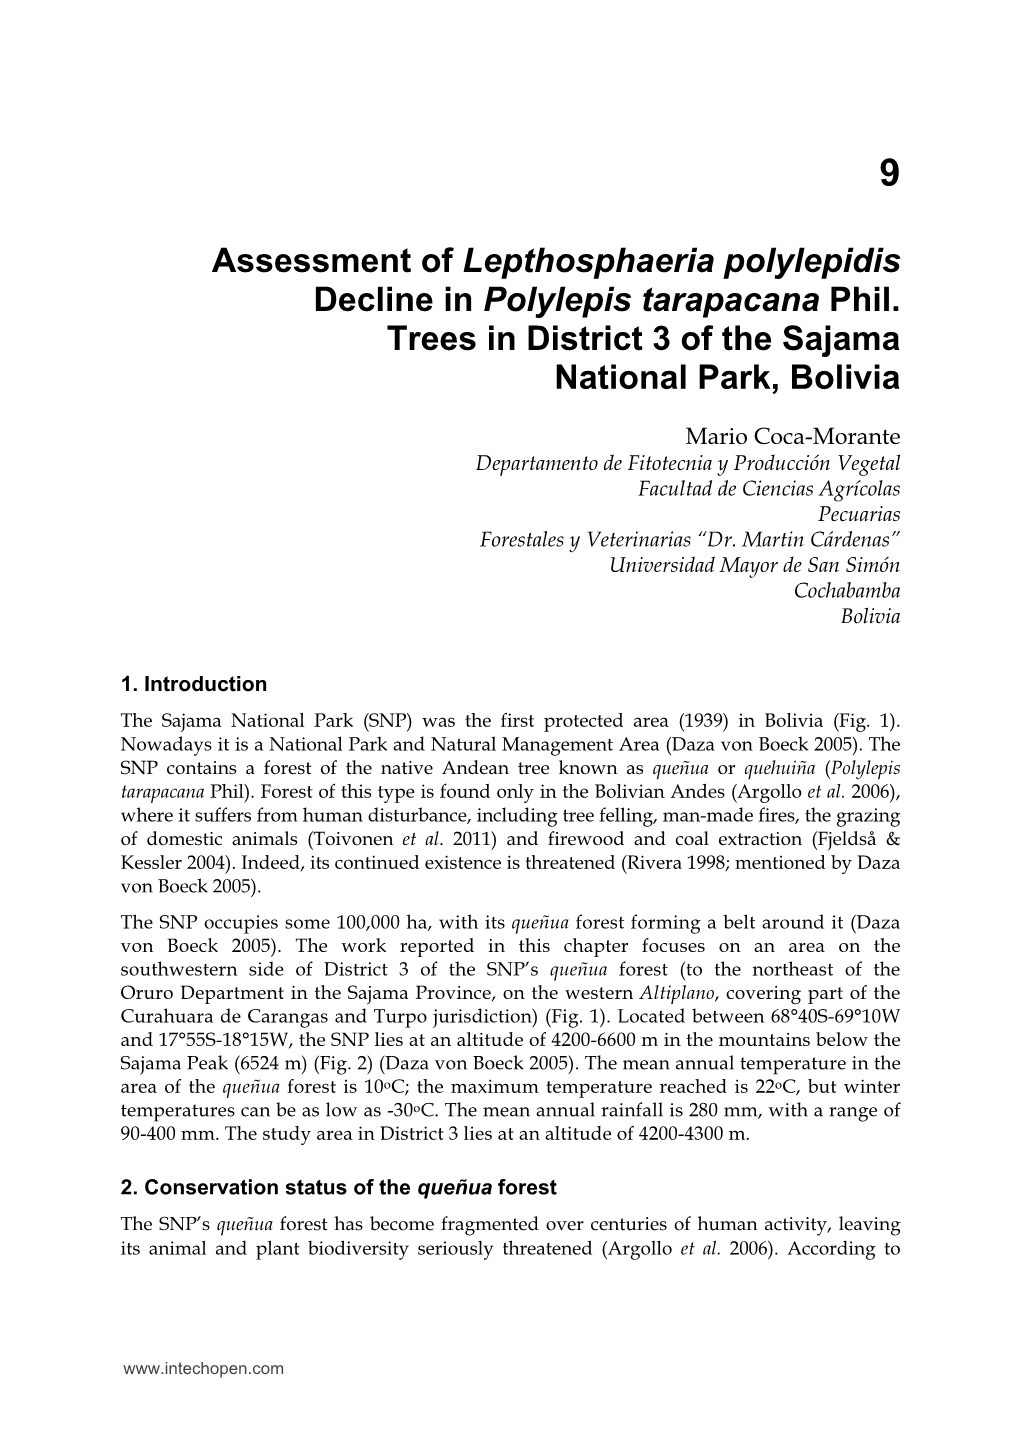 Assessment of Lepthosphaeria Polylepidis Decline in Polylepis Tarapacana Phil